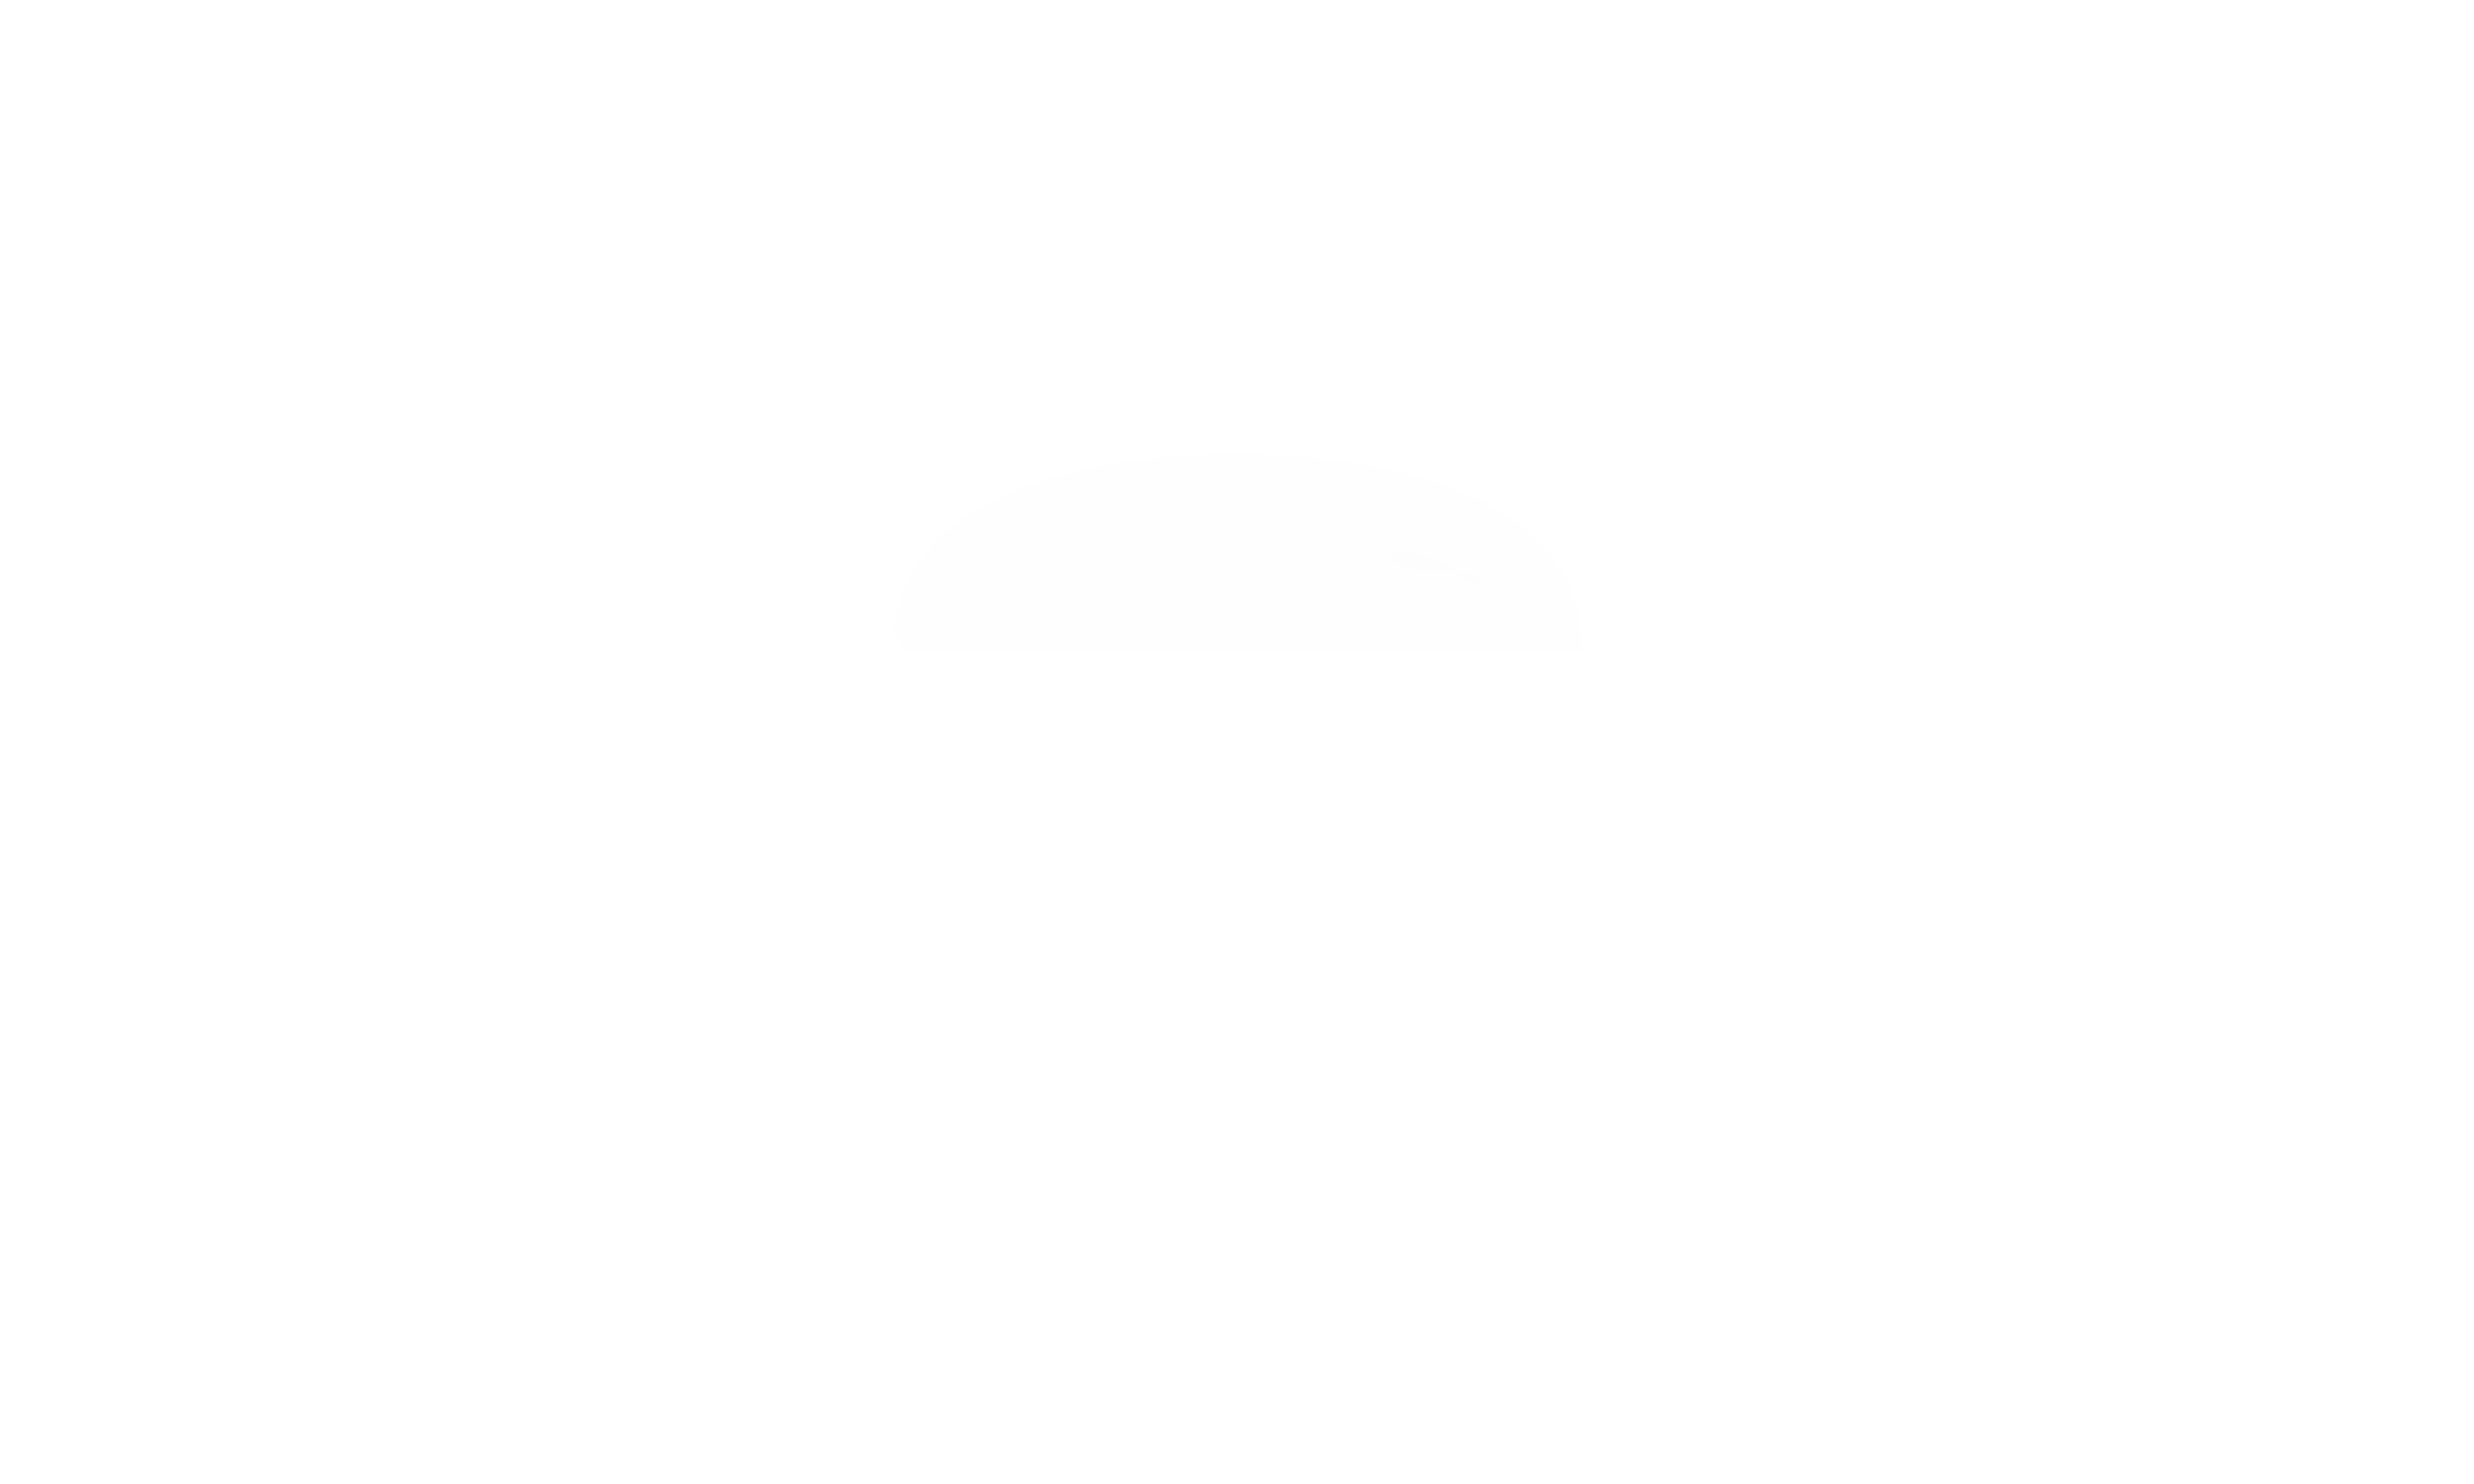 Central Bistro